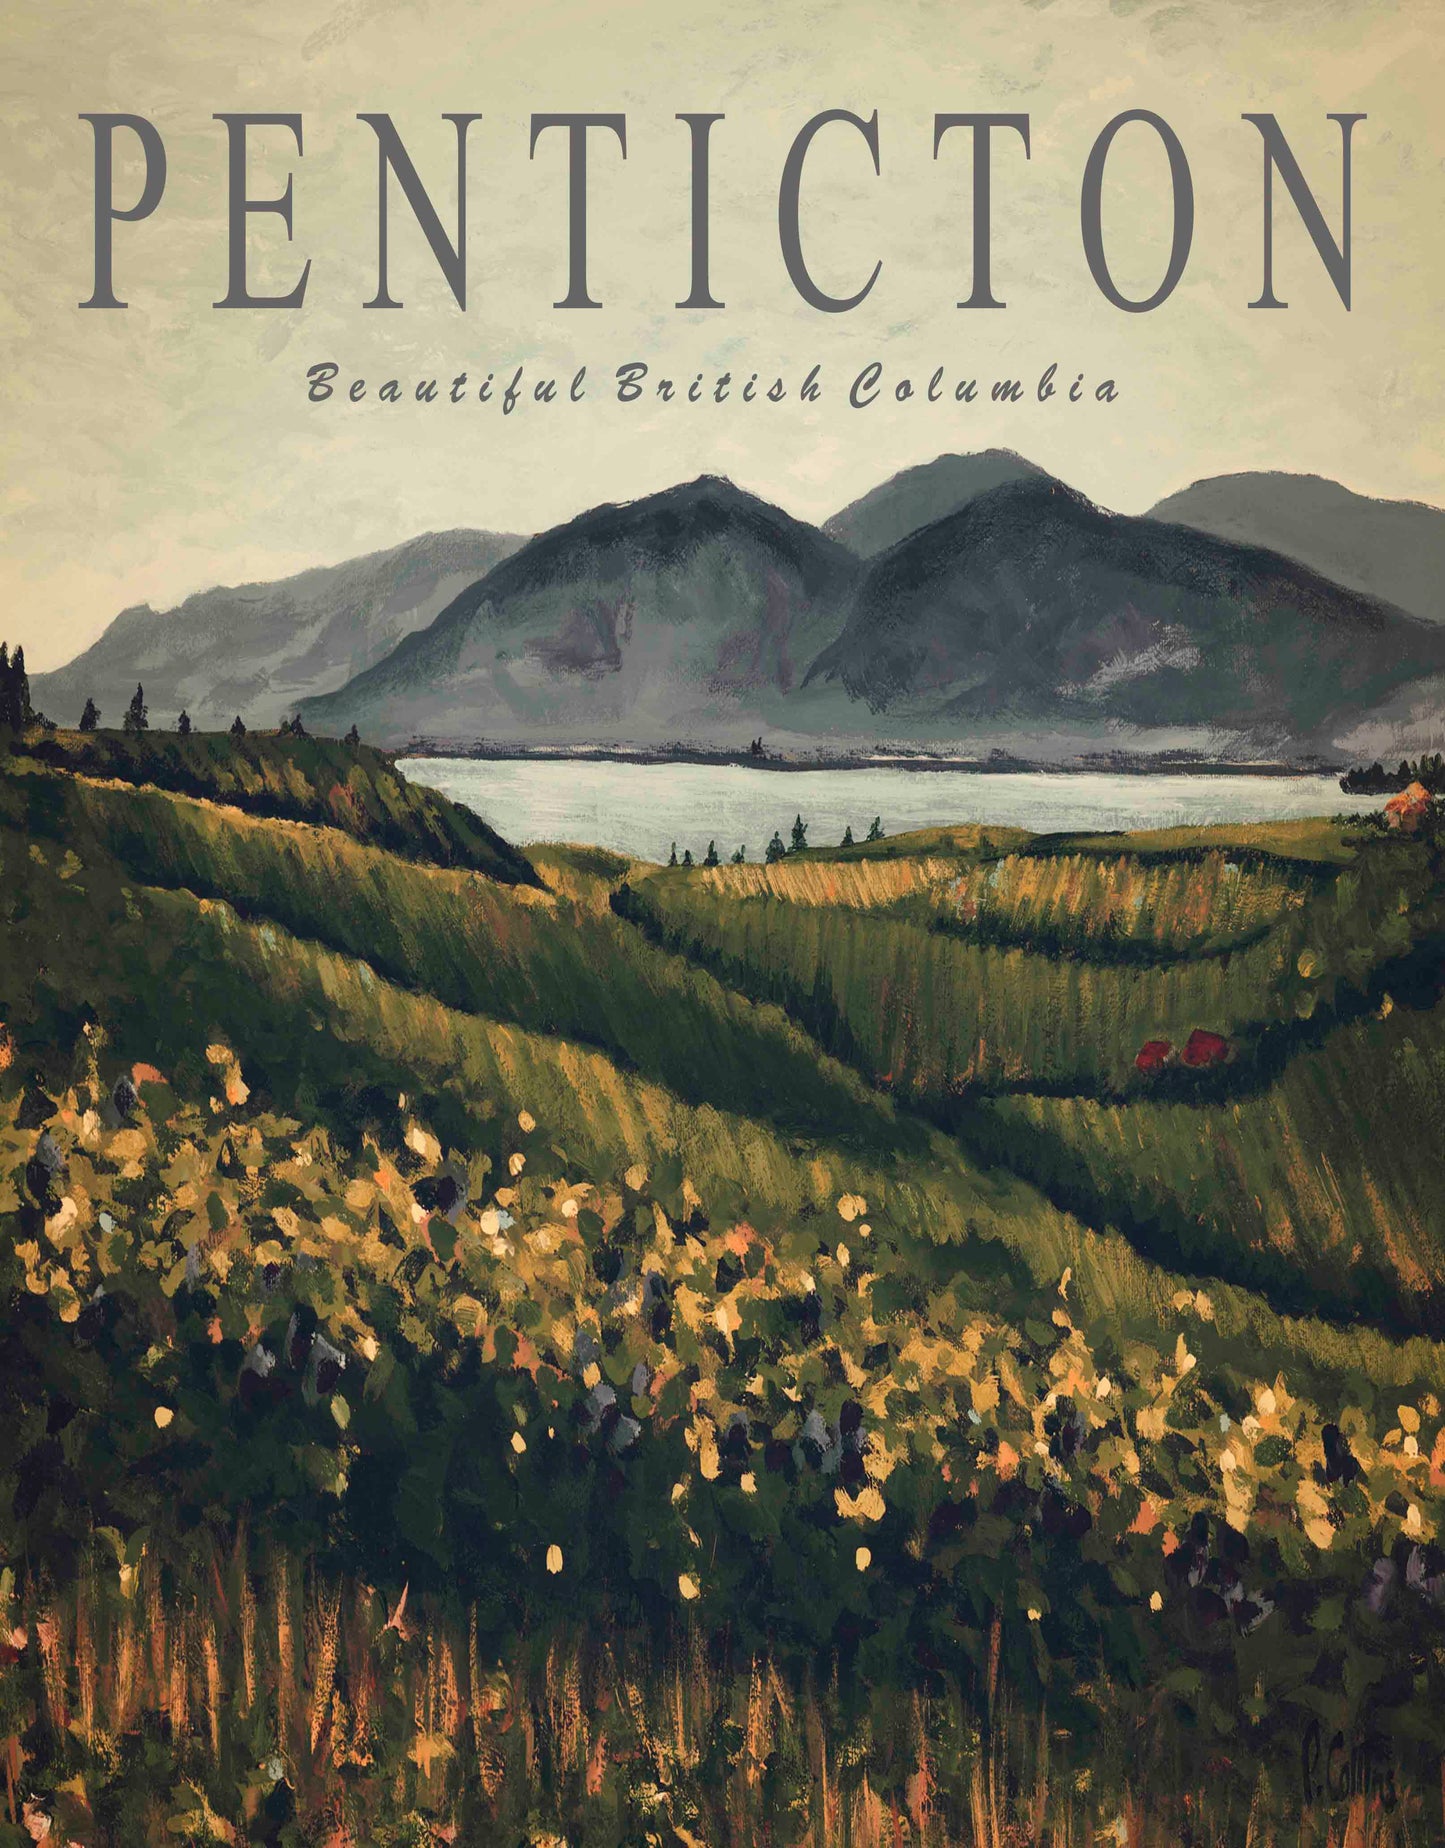 Poster - Penticton Hills Vintage